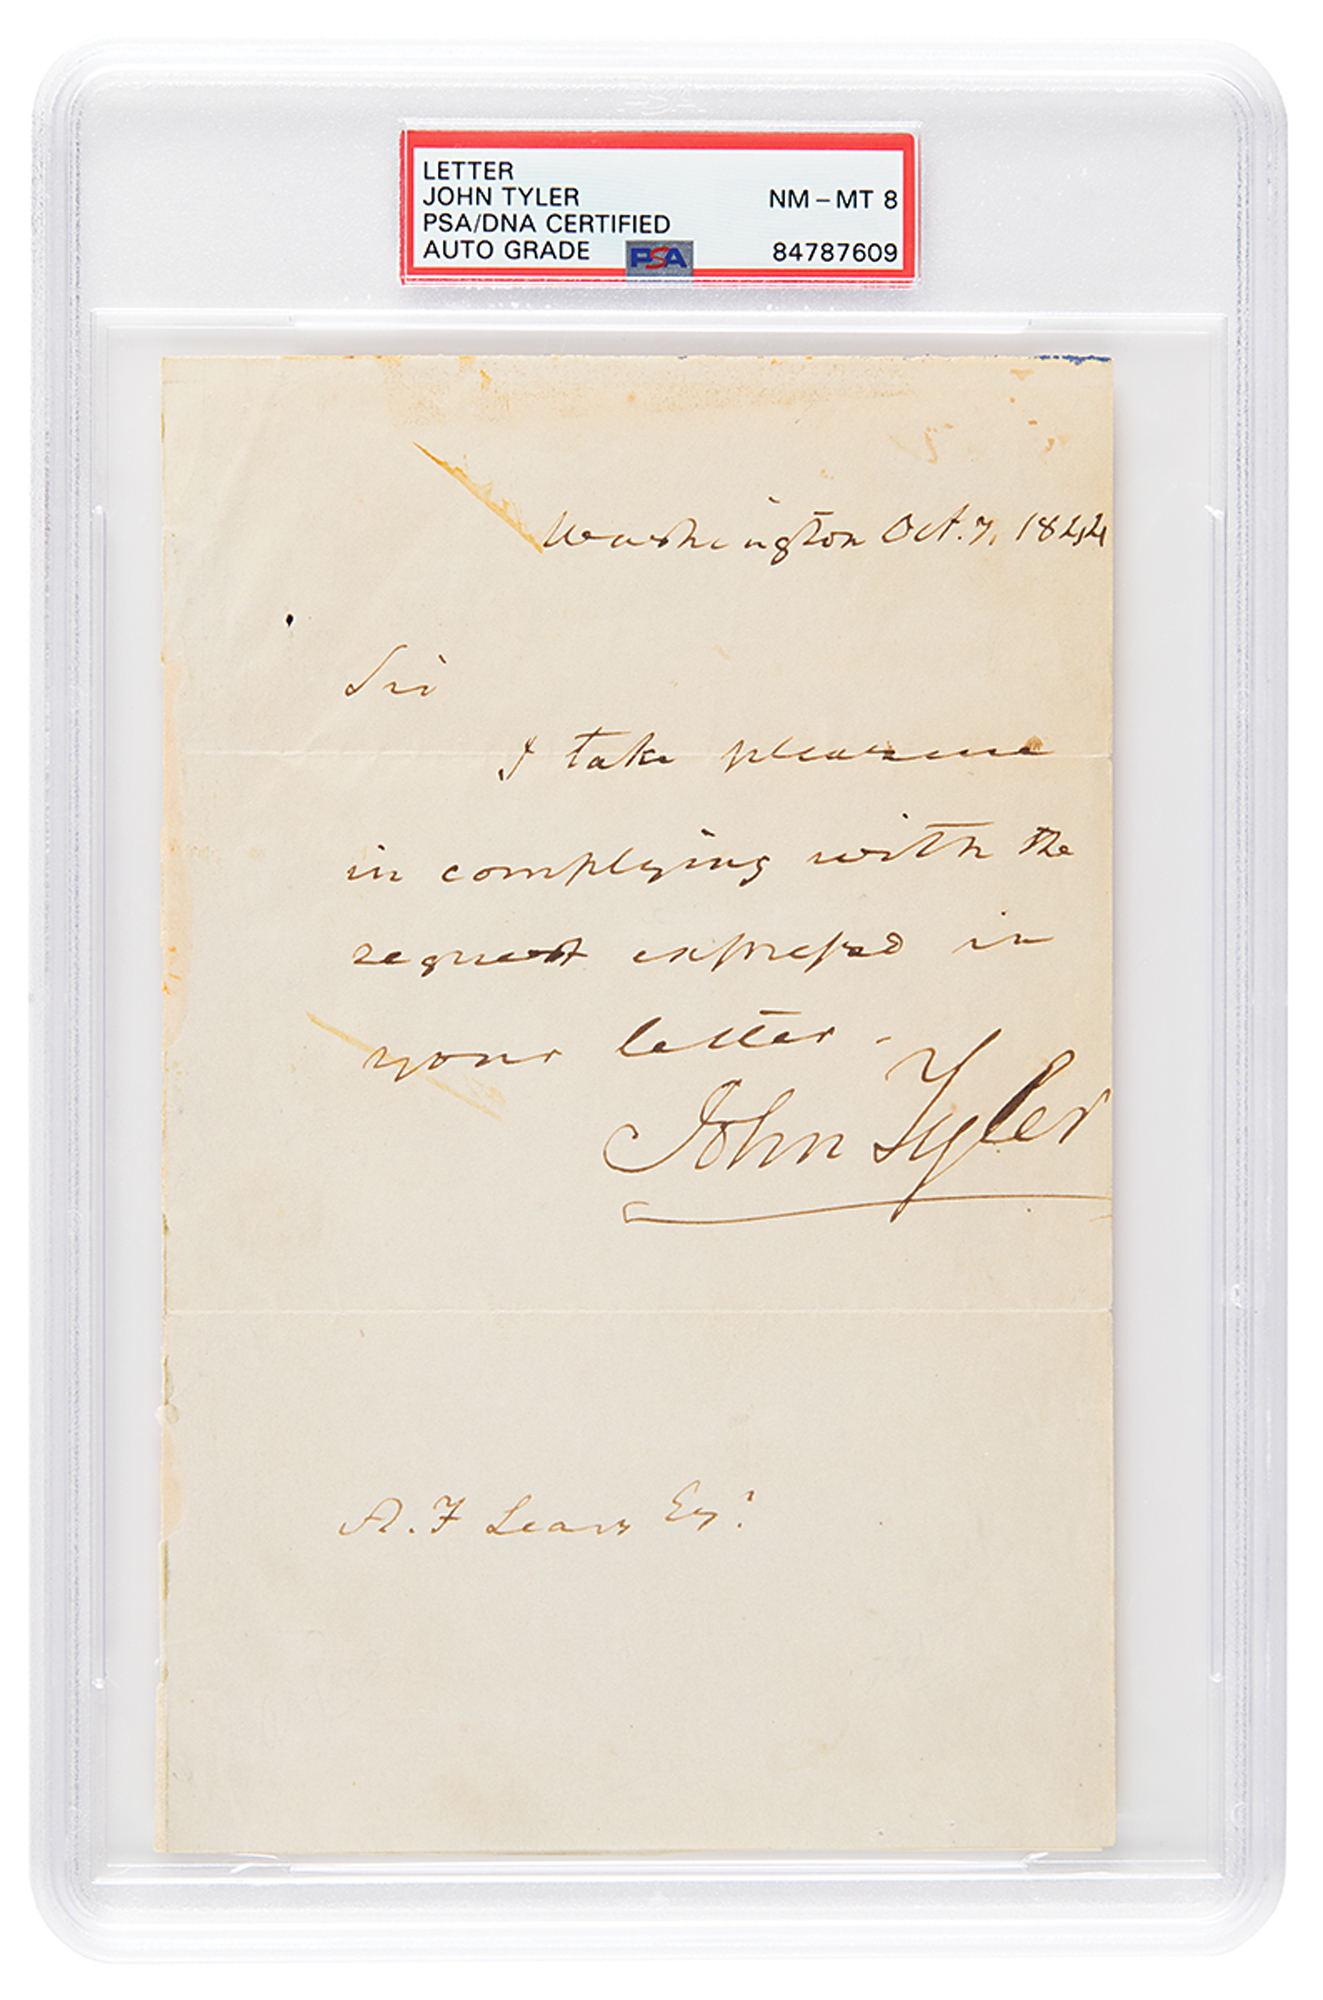 Lot #7016 John Tyler Autograph Letter Signed as President - PSA NM-MT 8